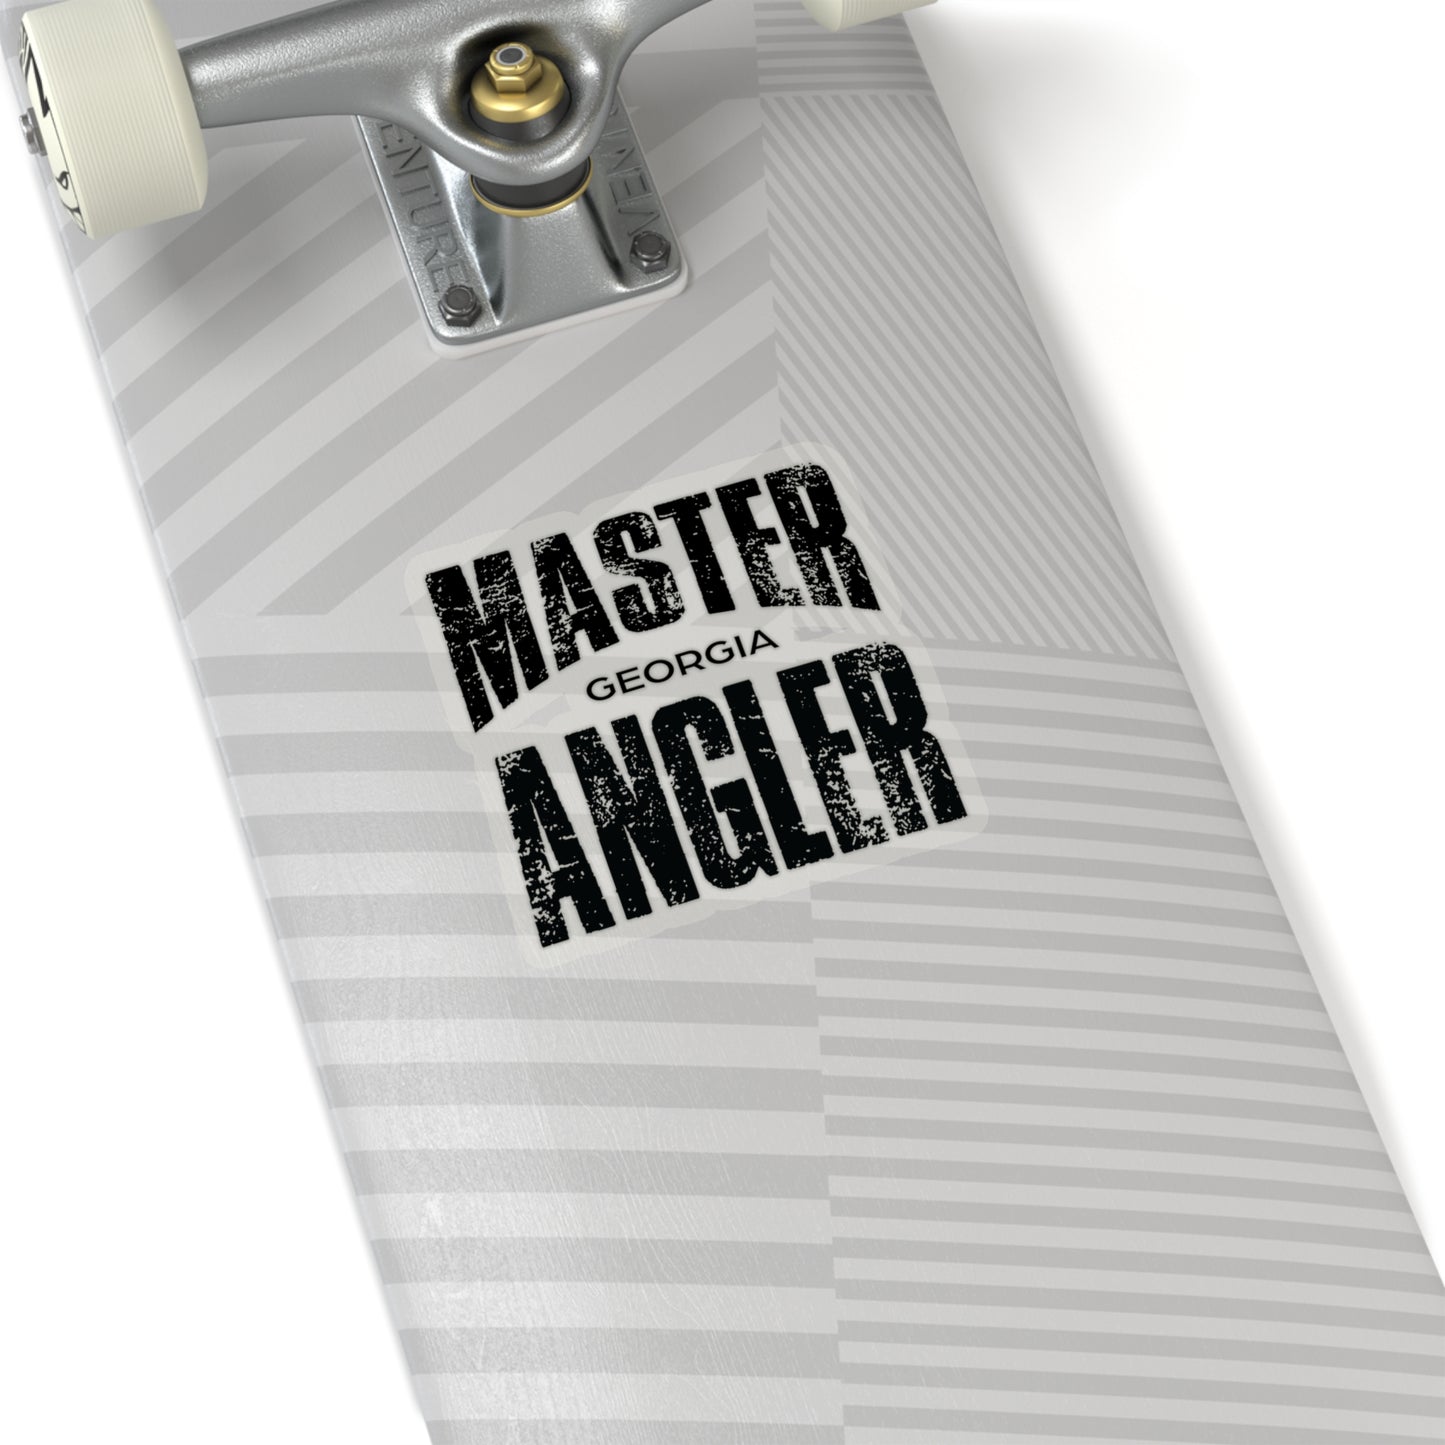 Georgia Master Angler Sticker - BLACK